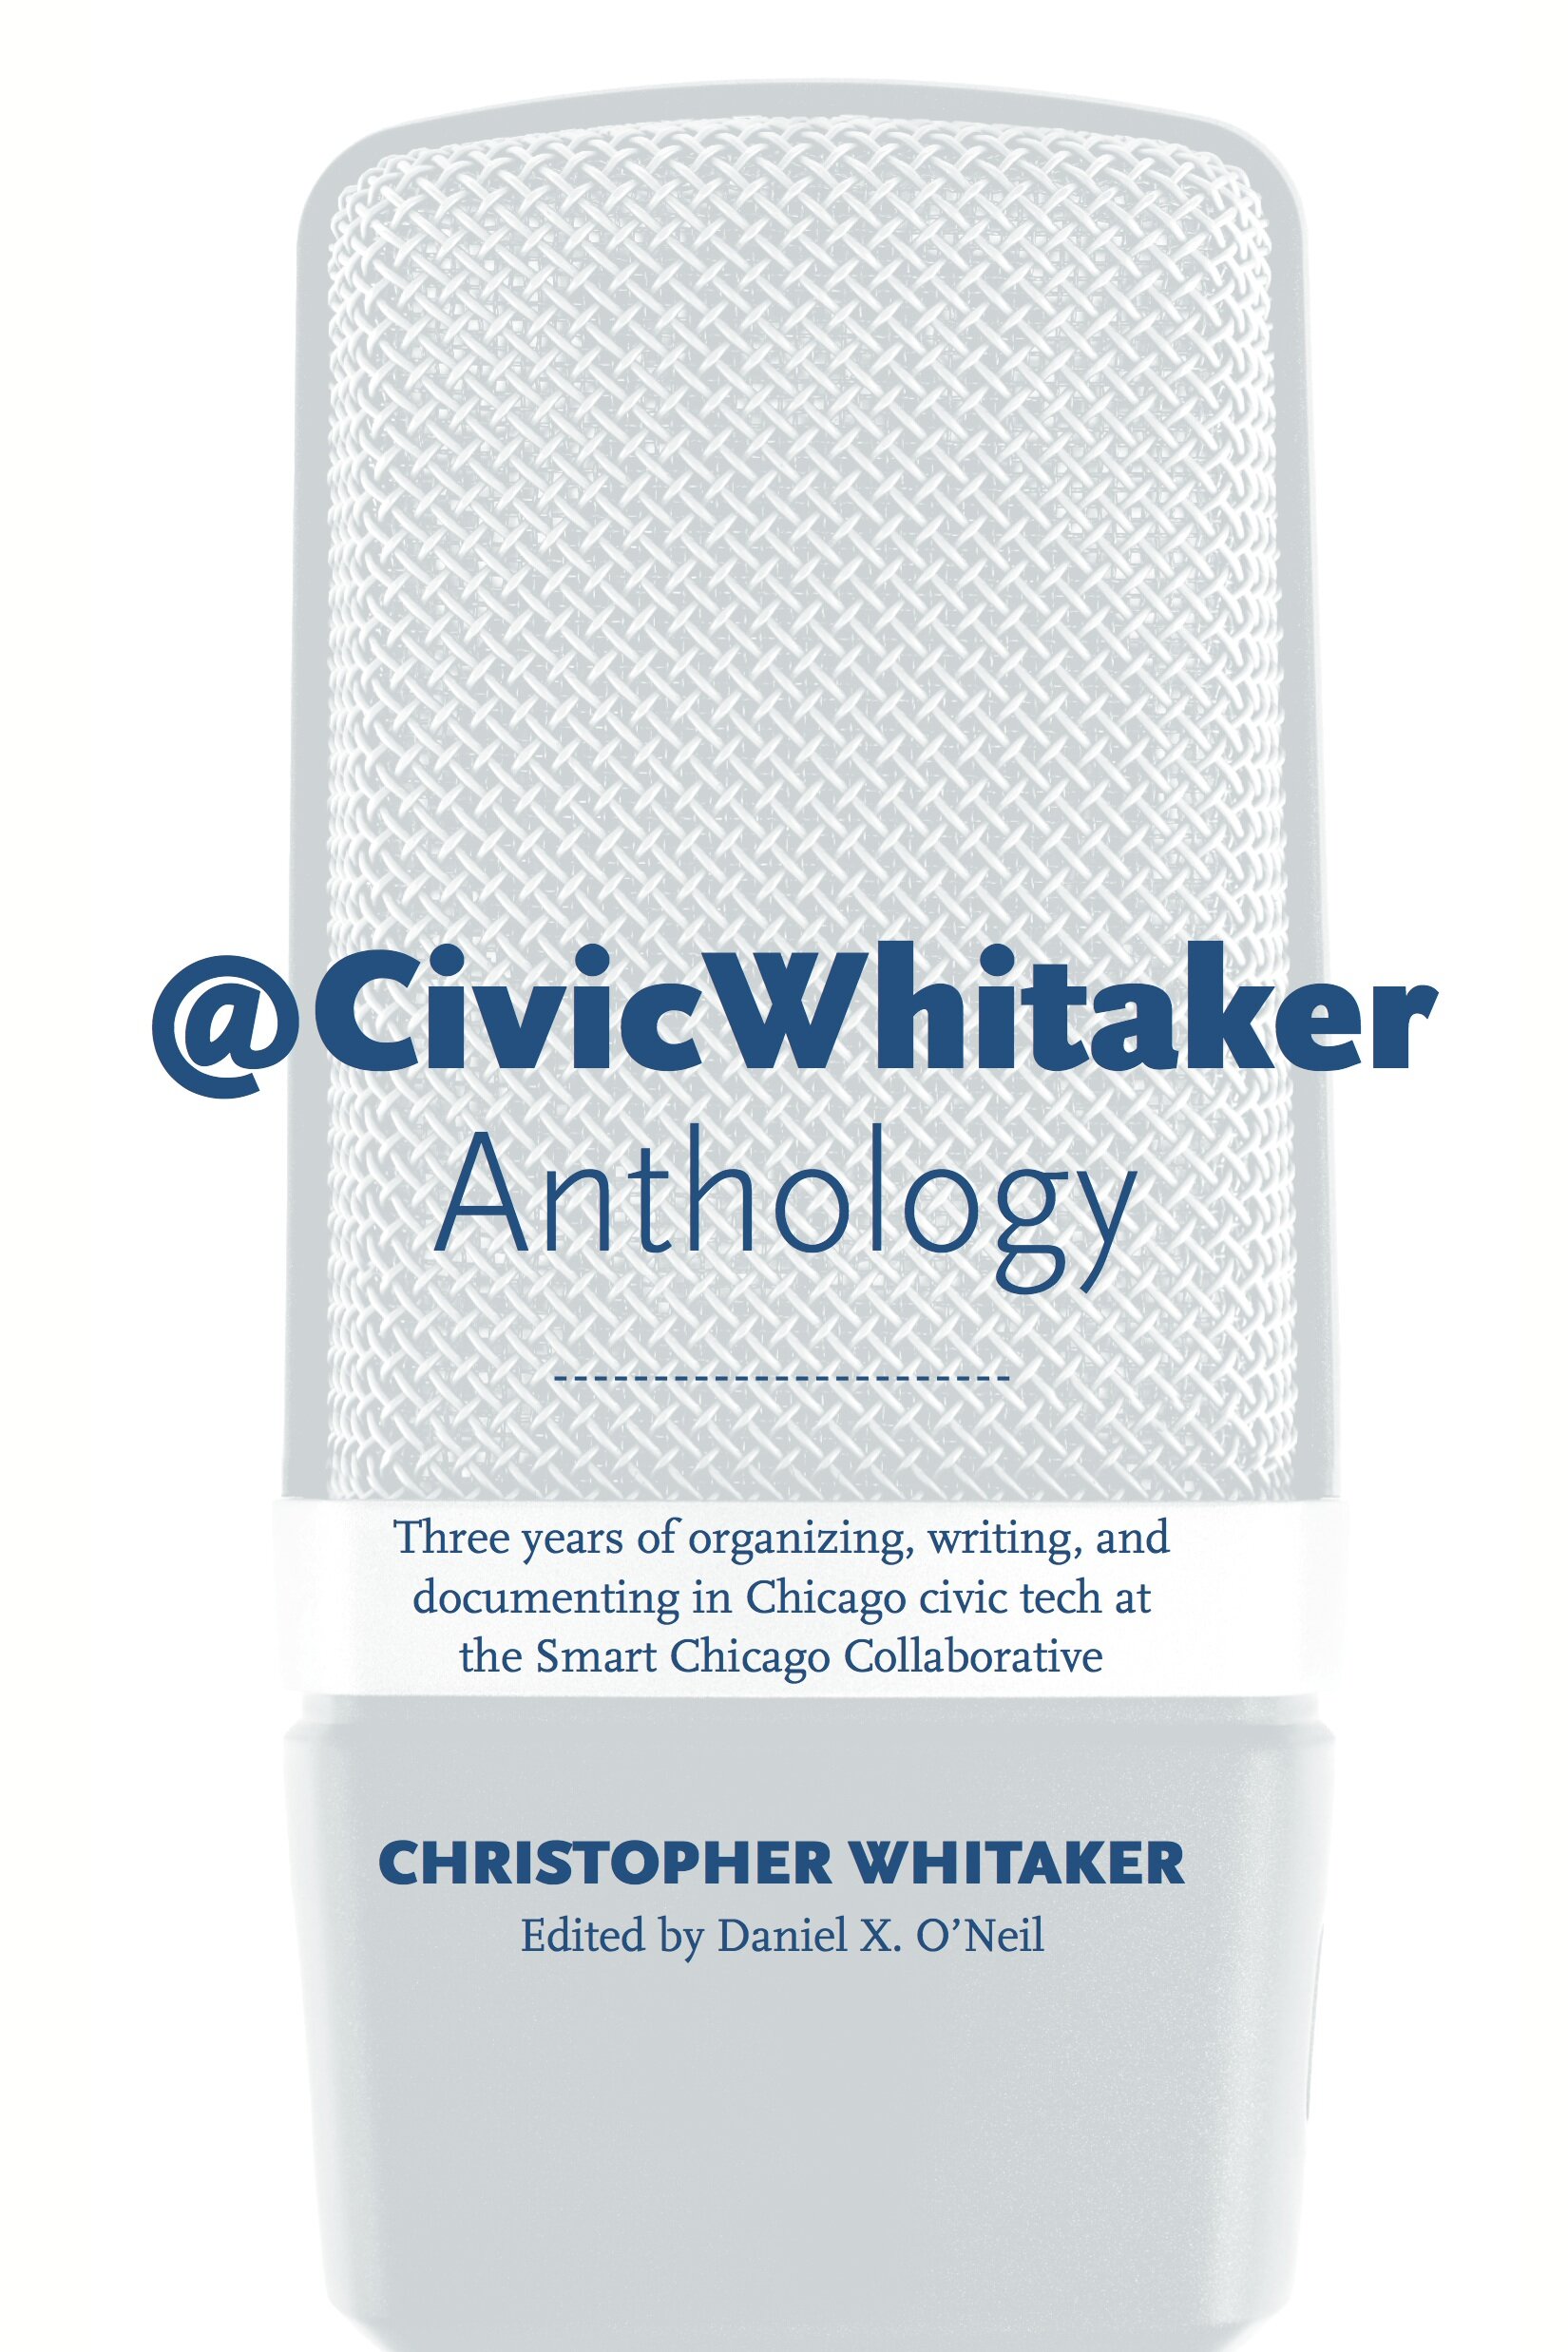 Launch: The @CivicWhitaker Anthology